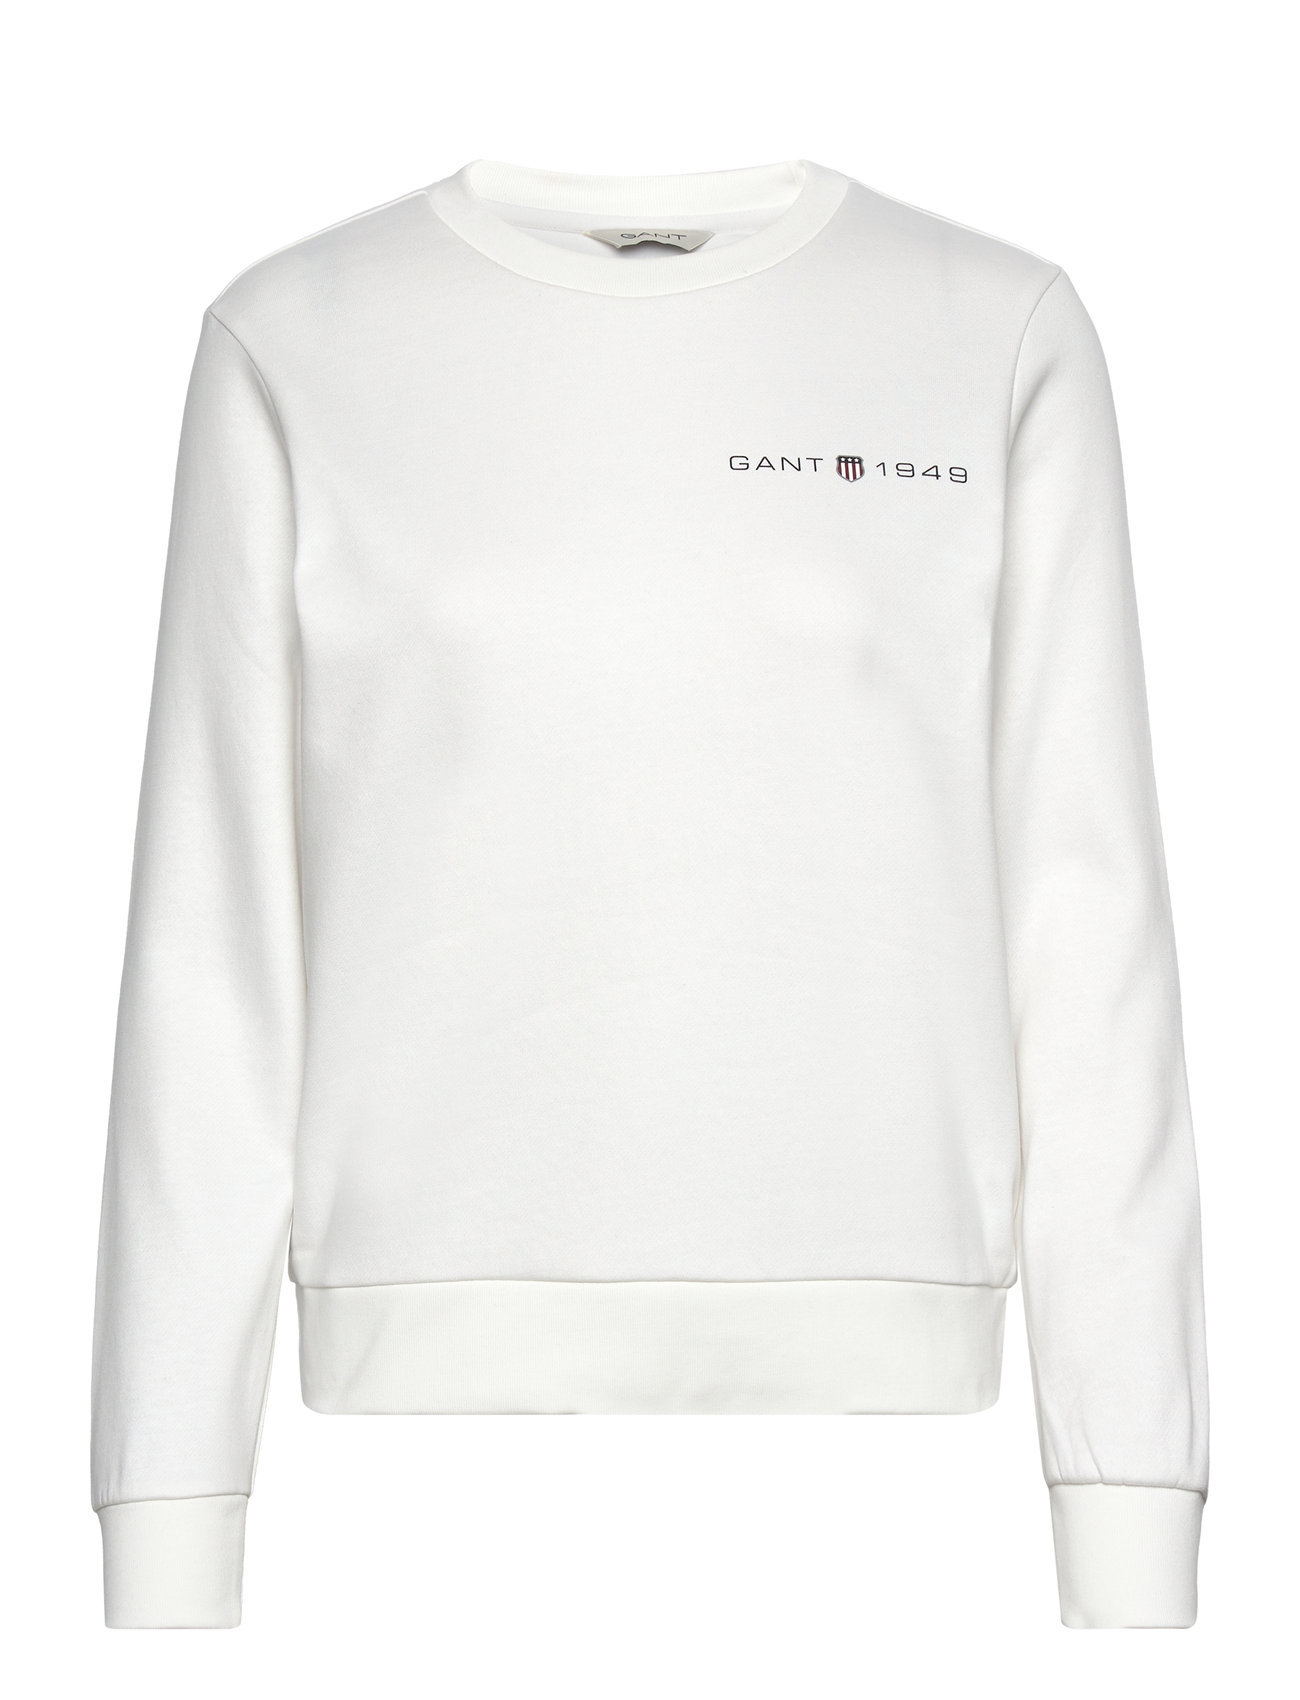 Reg Printed Graphic C-Neck Tops Sweatshirts & Hoodies Sweatshirts GANT